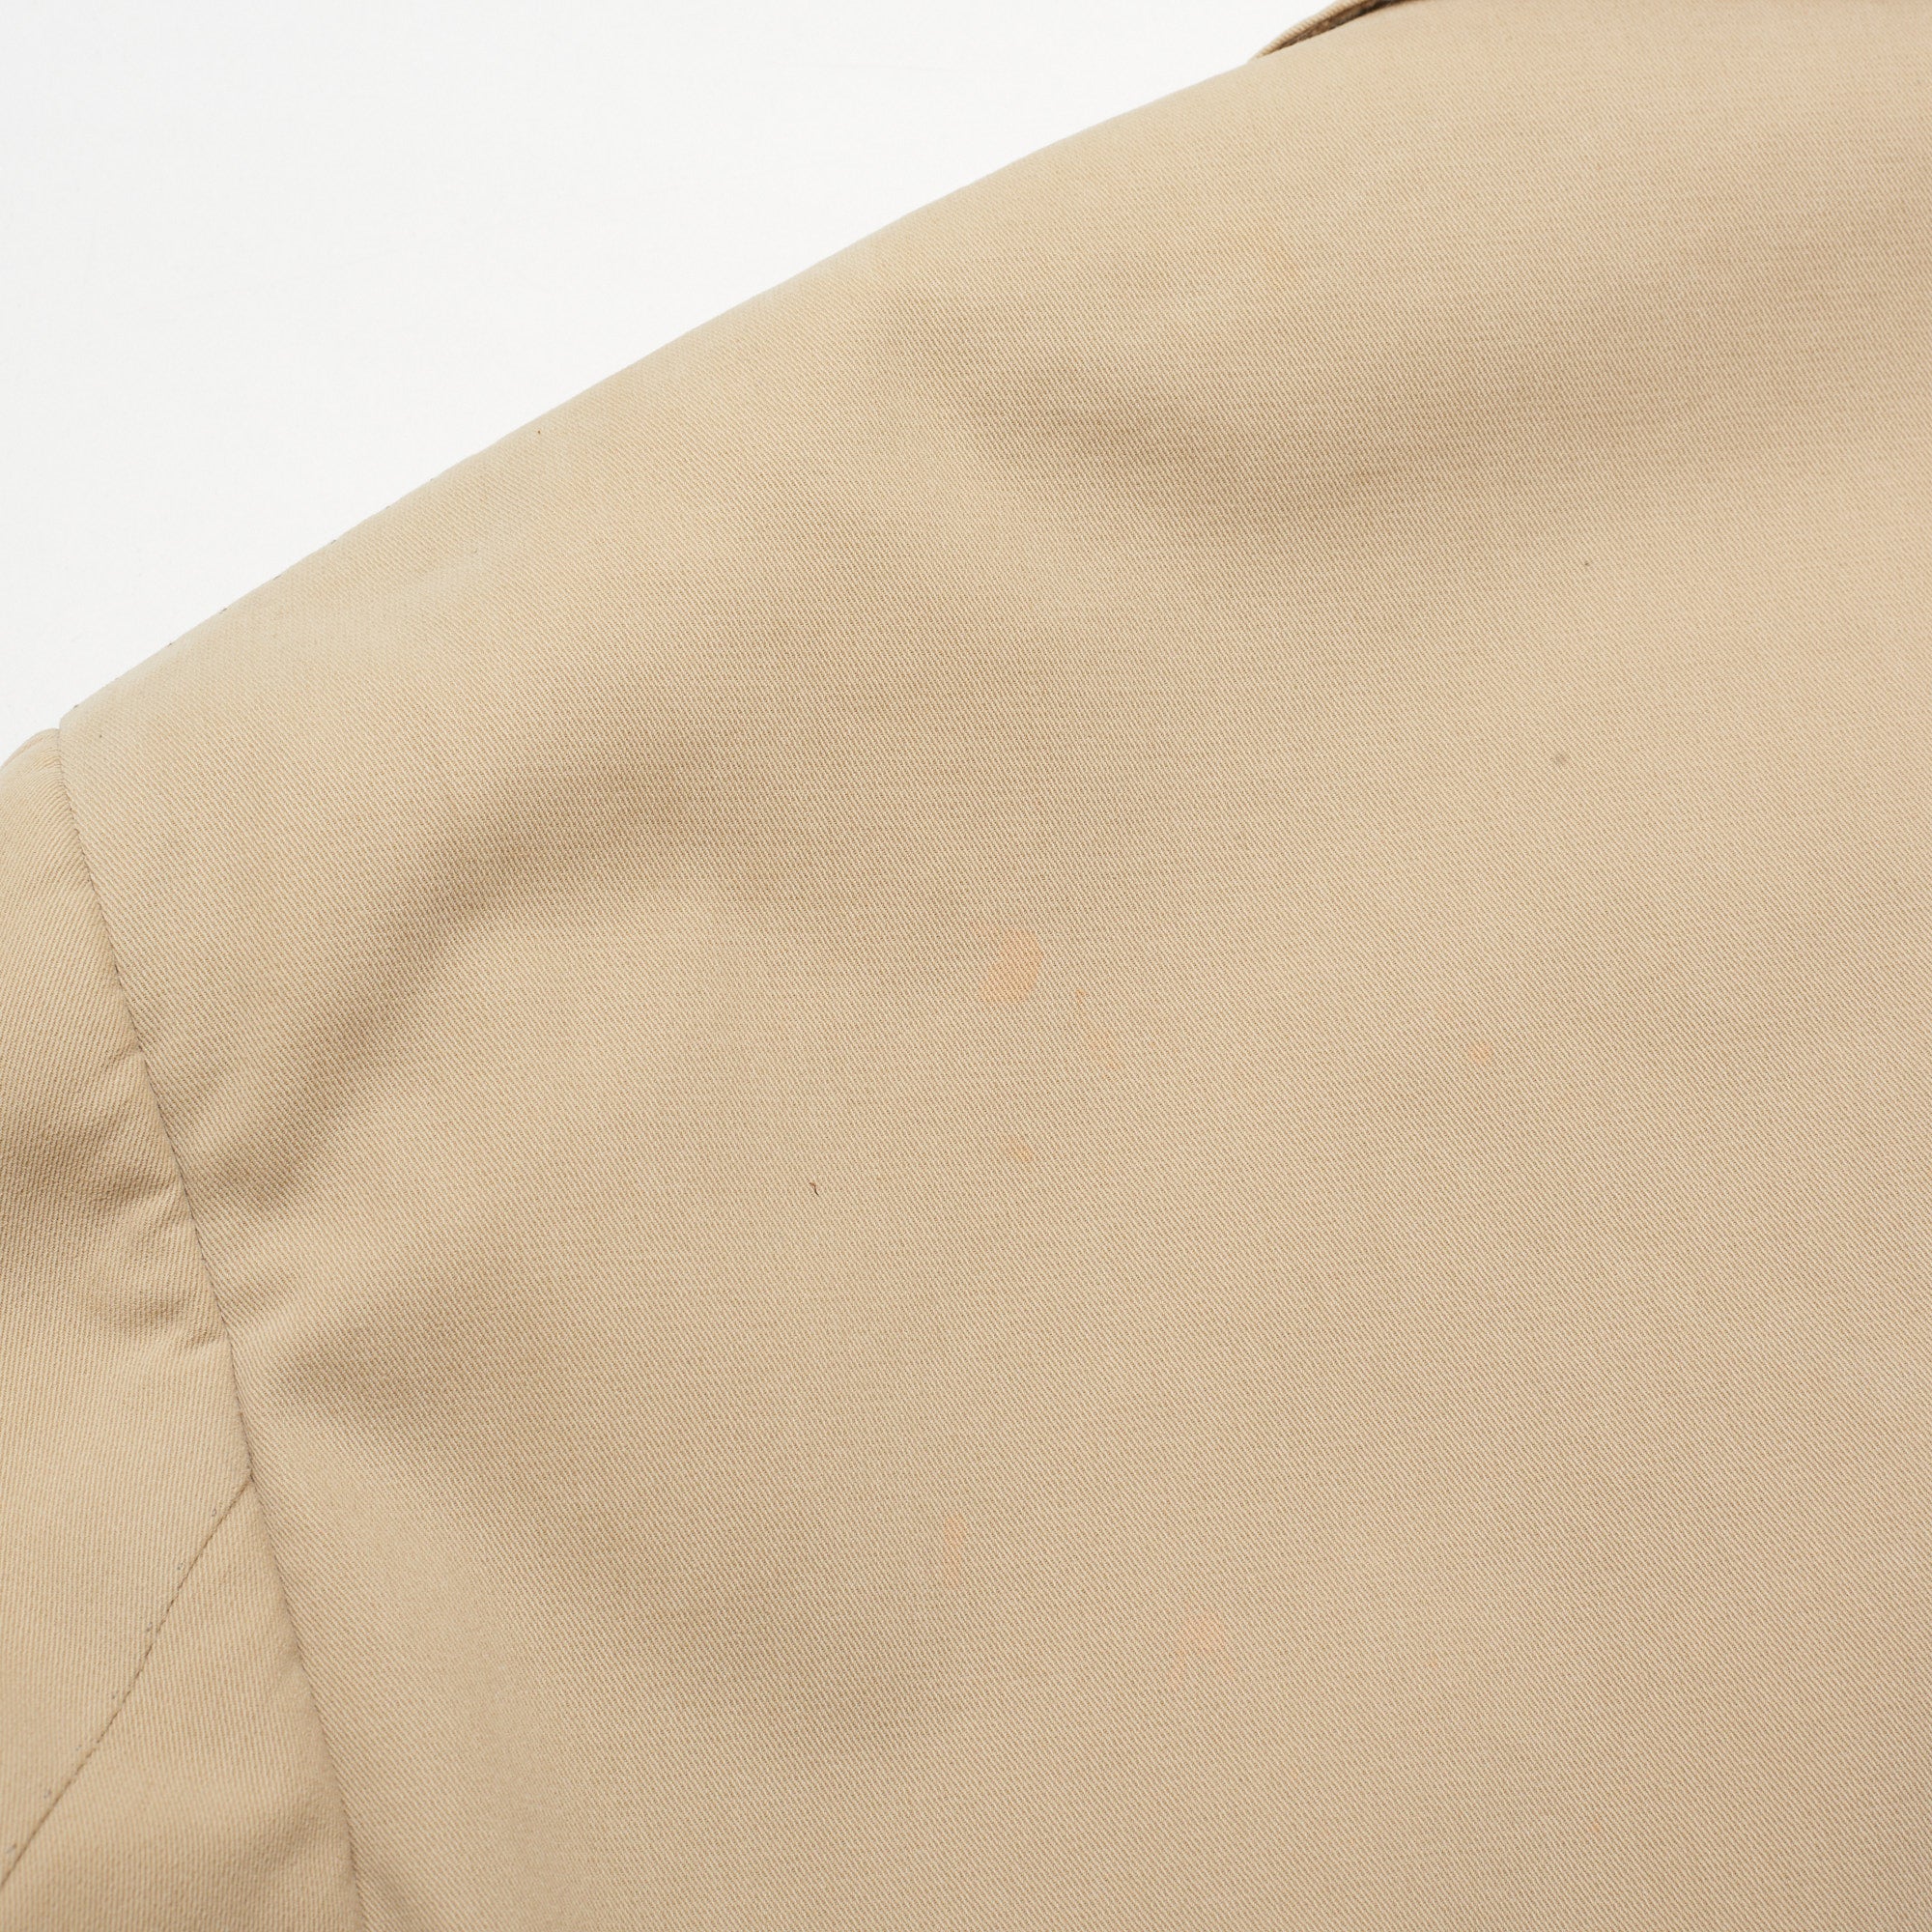 Cotton Suit Material with Chiffon Dupatta | December Update - Srishti  Textile